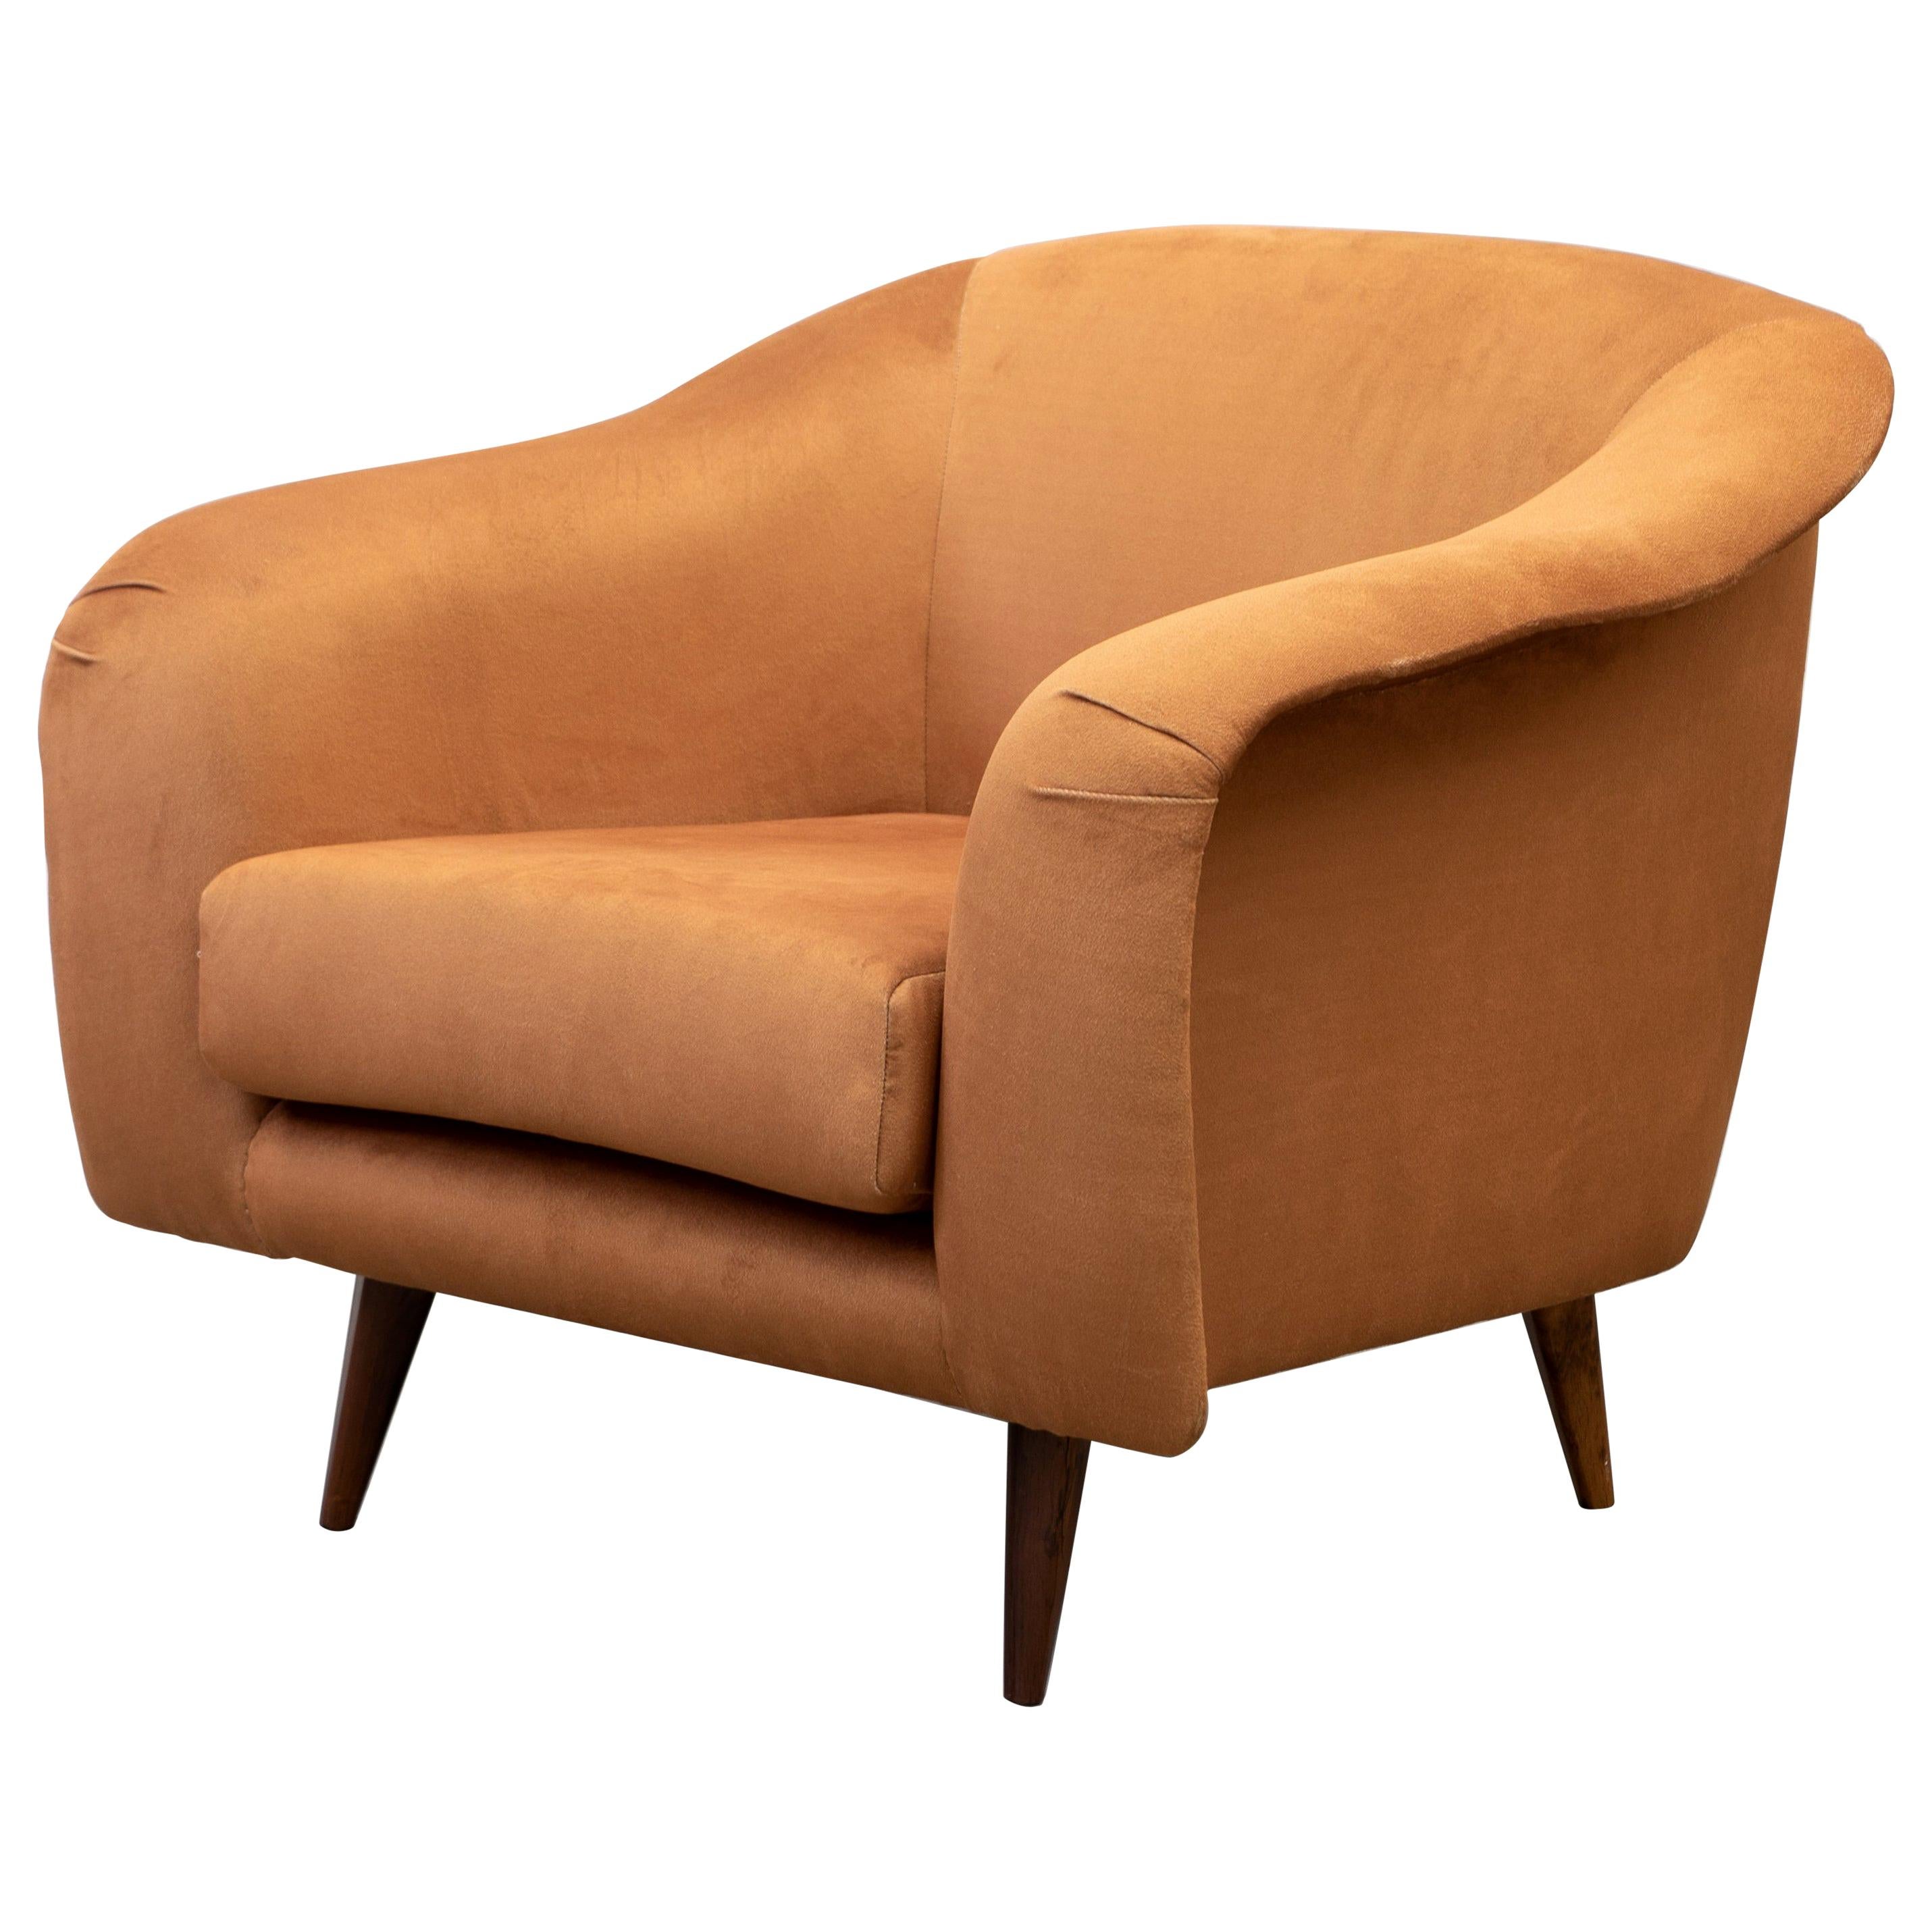 "Curva" Armchair, Joaquim Tenreiro, 1960s, Brazilian Midcentury Design